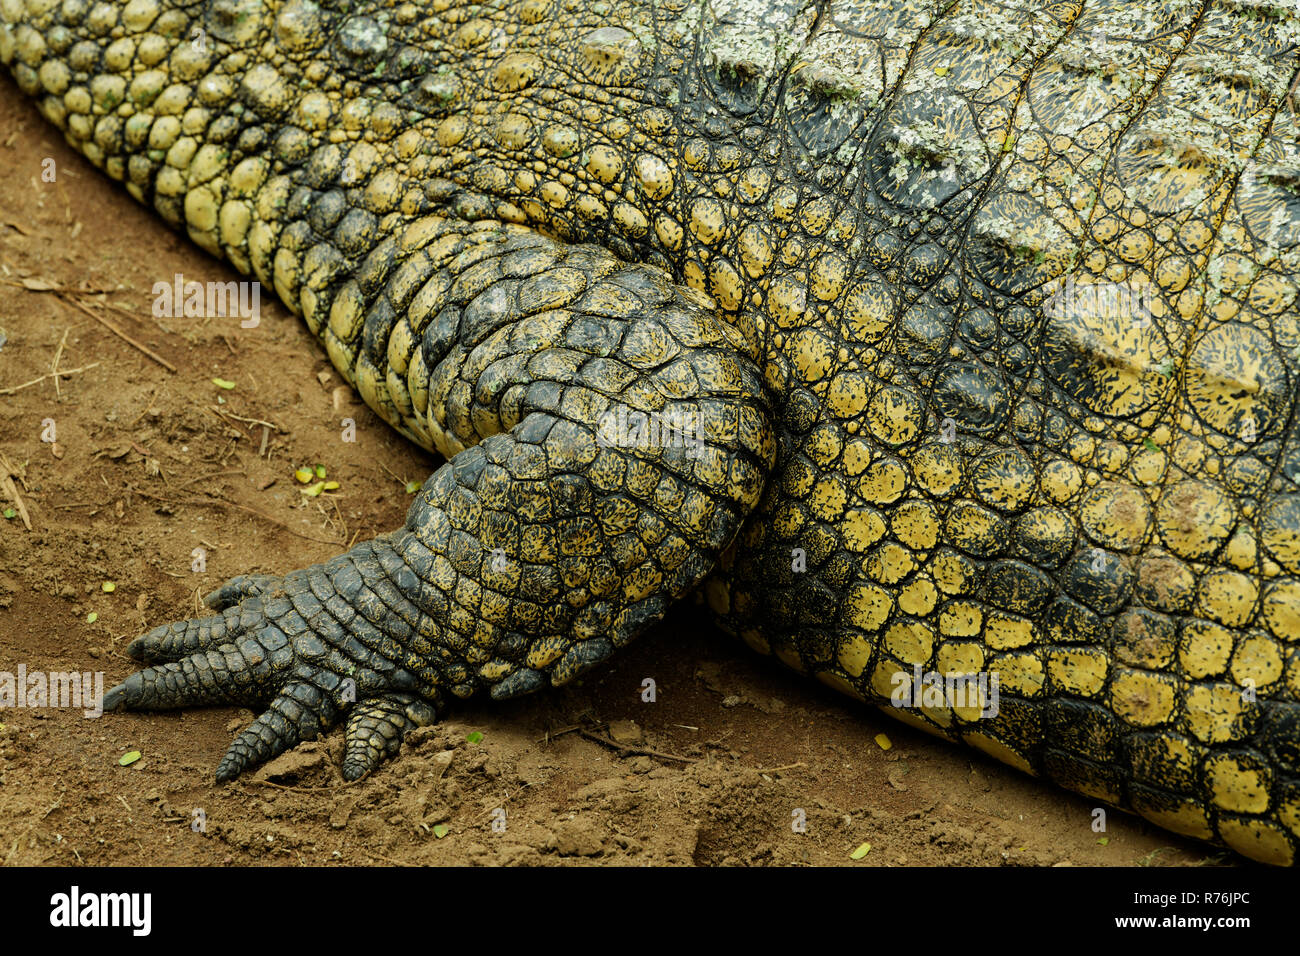 Durban, KwaZulu-Natal, South Africa, close-up, detail, adult Nile Crocodile, Crocodylus niloticus, skin and foot, patterns of animal camouflage Stock Photo